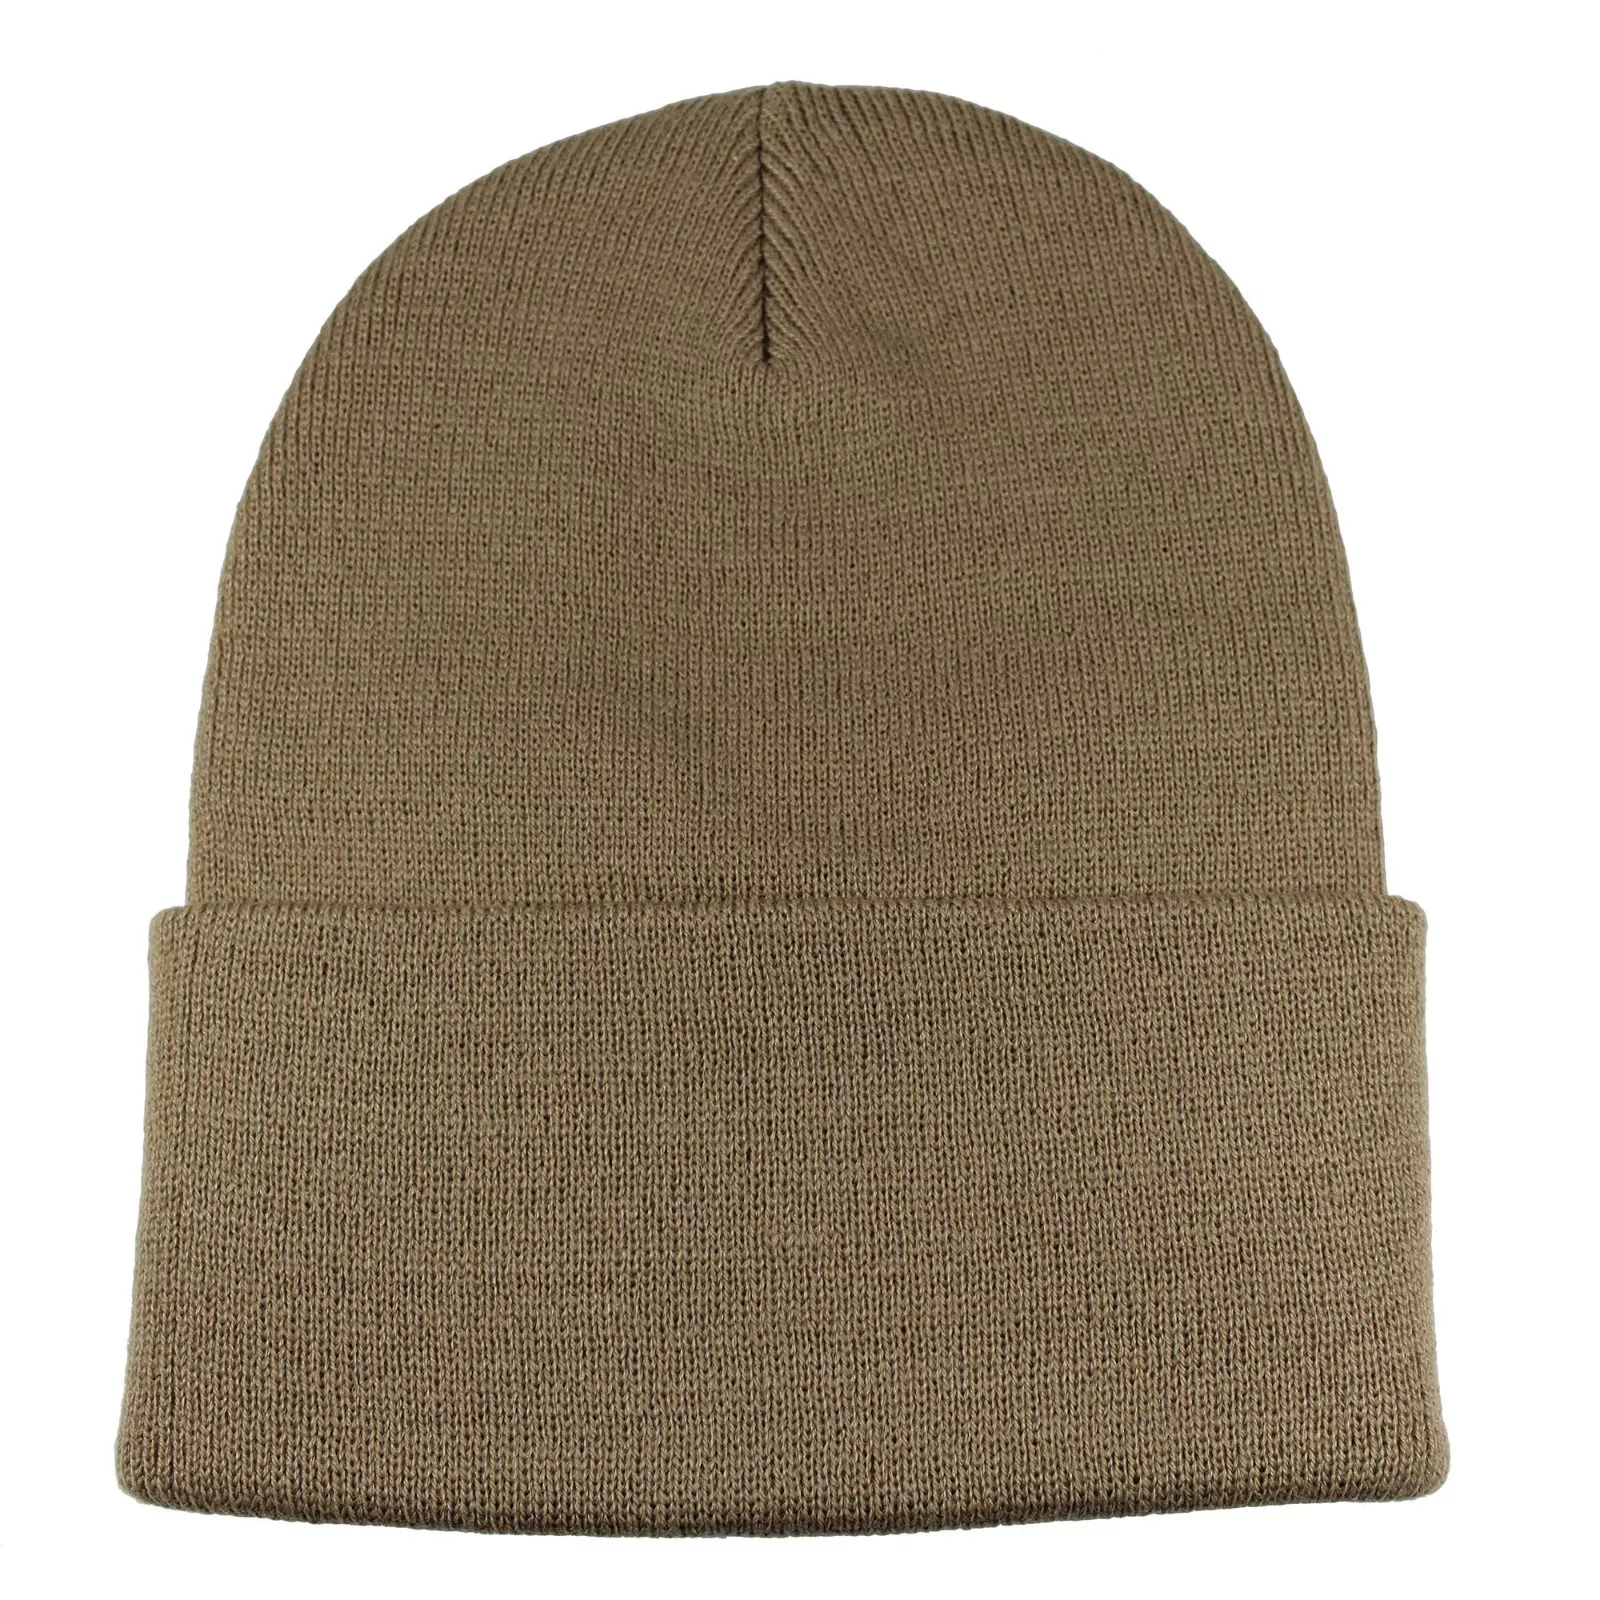 Unisex Plain Warm Knit Beanie Hat Cuff Skull Ski Cap Khaki1pcs - £7.95 GBP